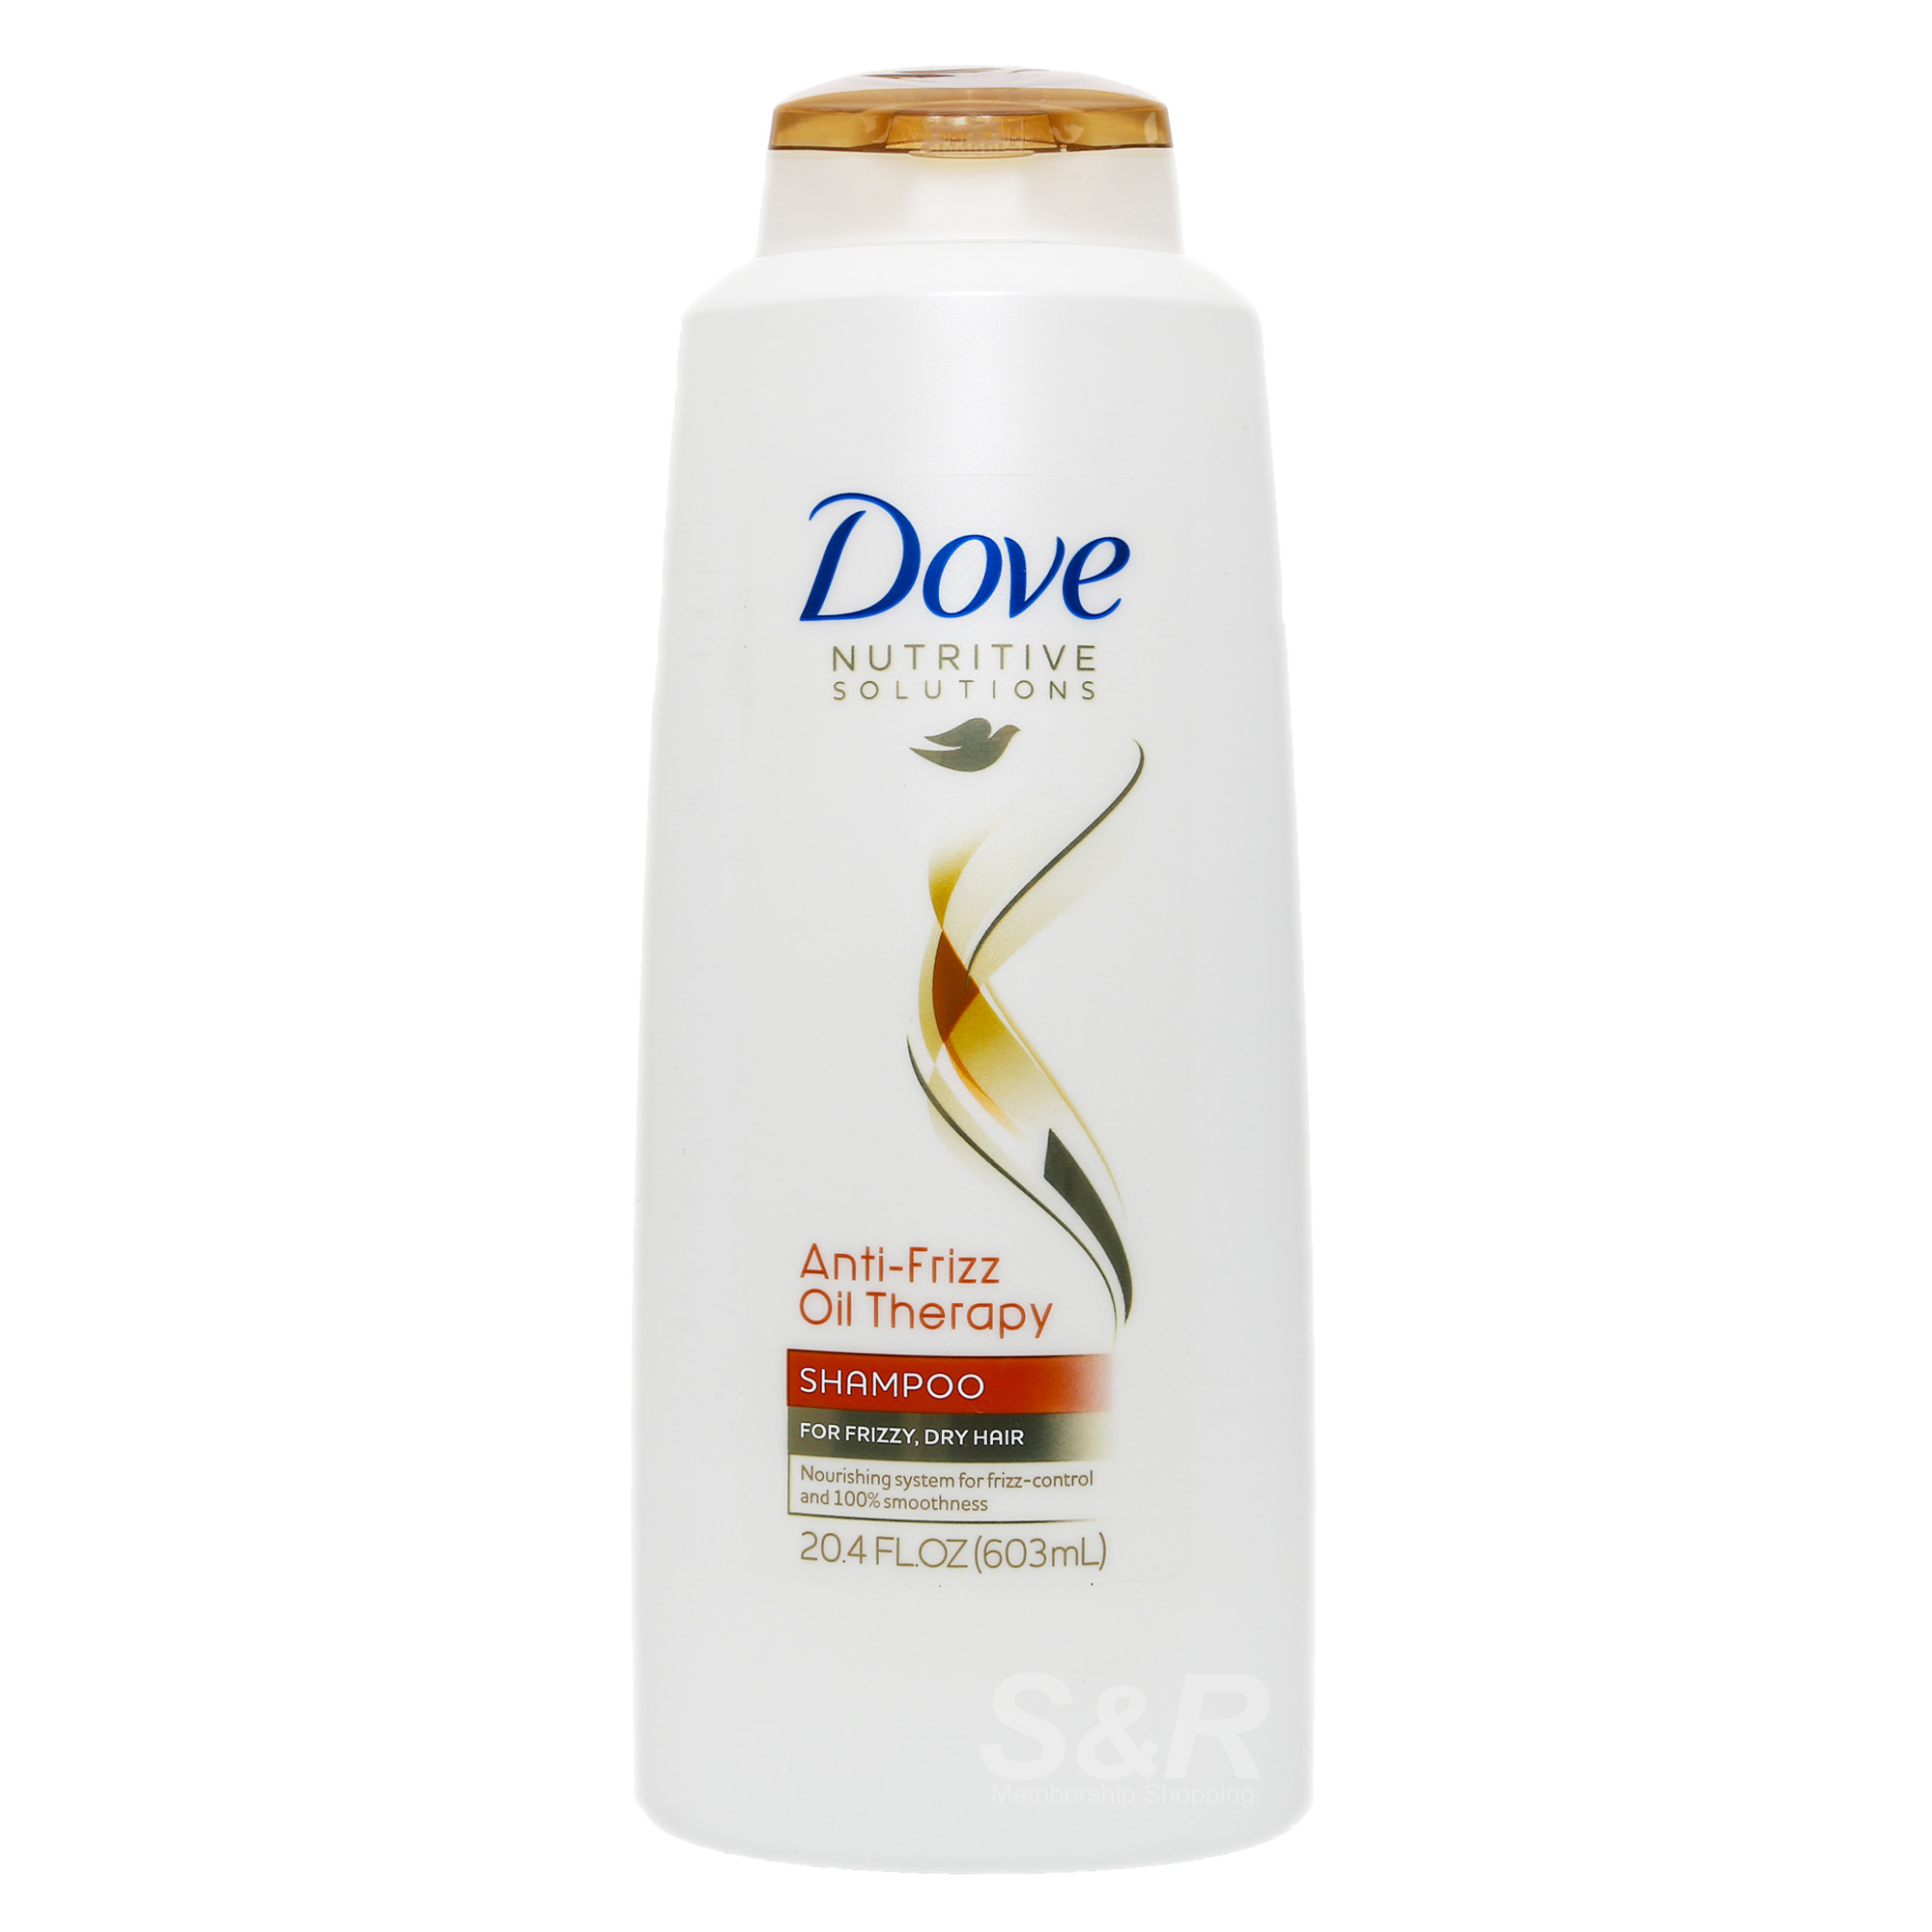 Dove Nutritive Solutions Anti-Frizz Oil Therapy Shampoo 603mL